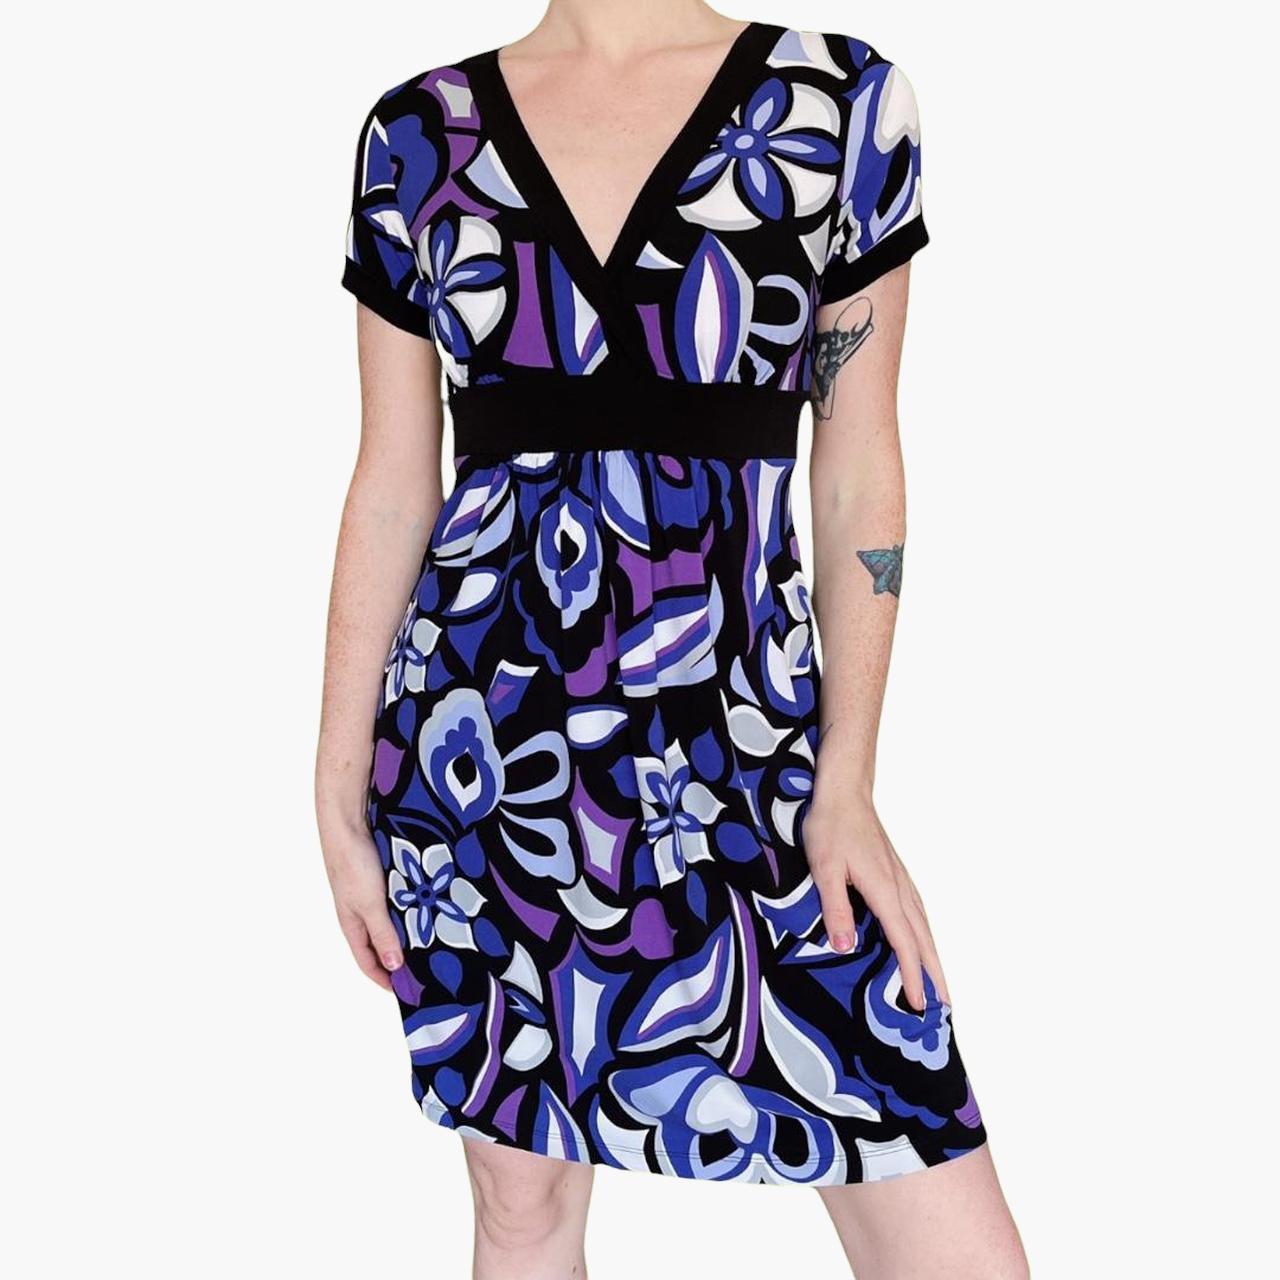 Product Image 1 - Y2K Purple Floral Dress

‼️ 𝐁𝐔𝐘